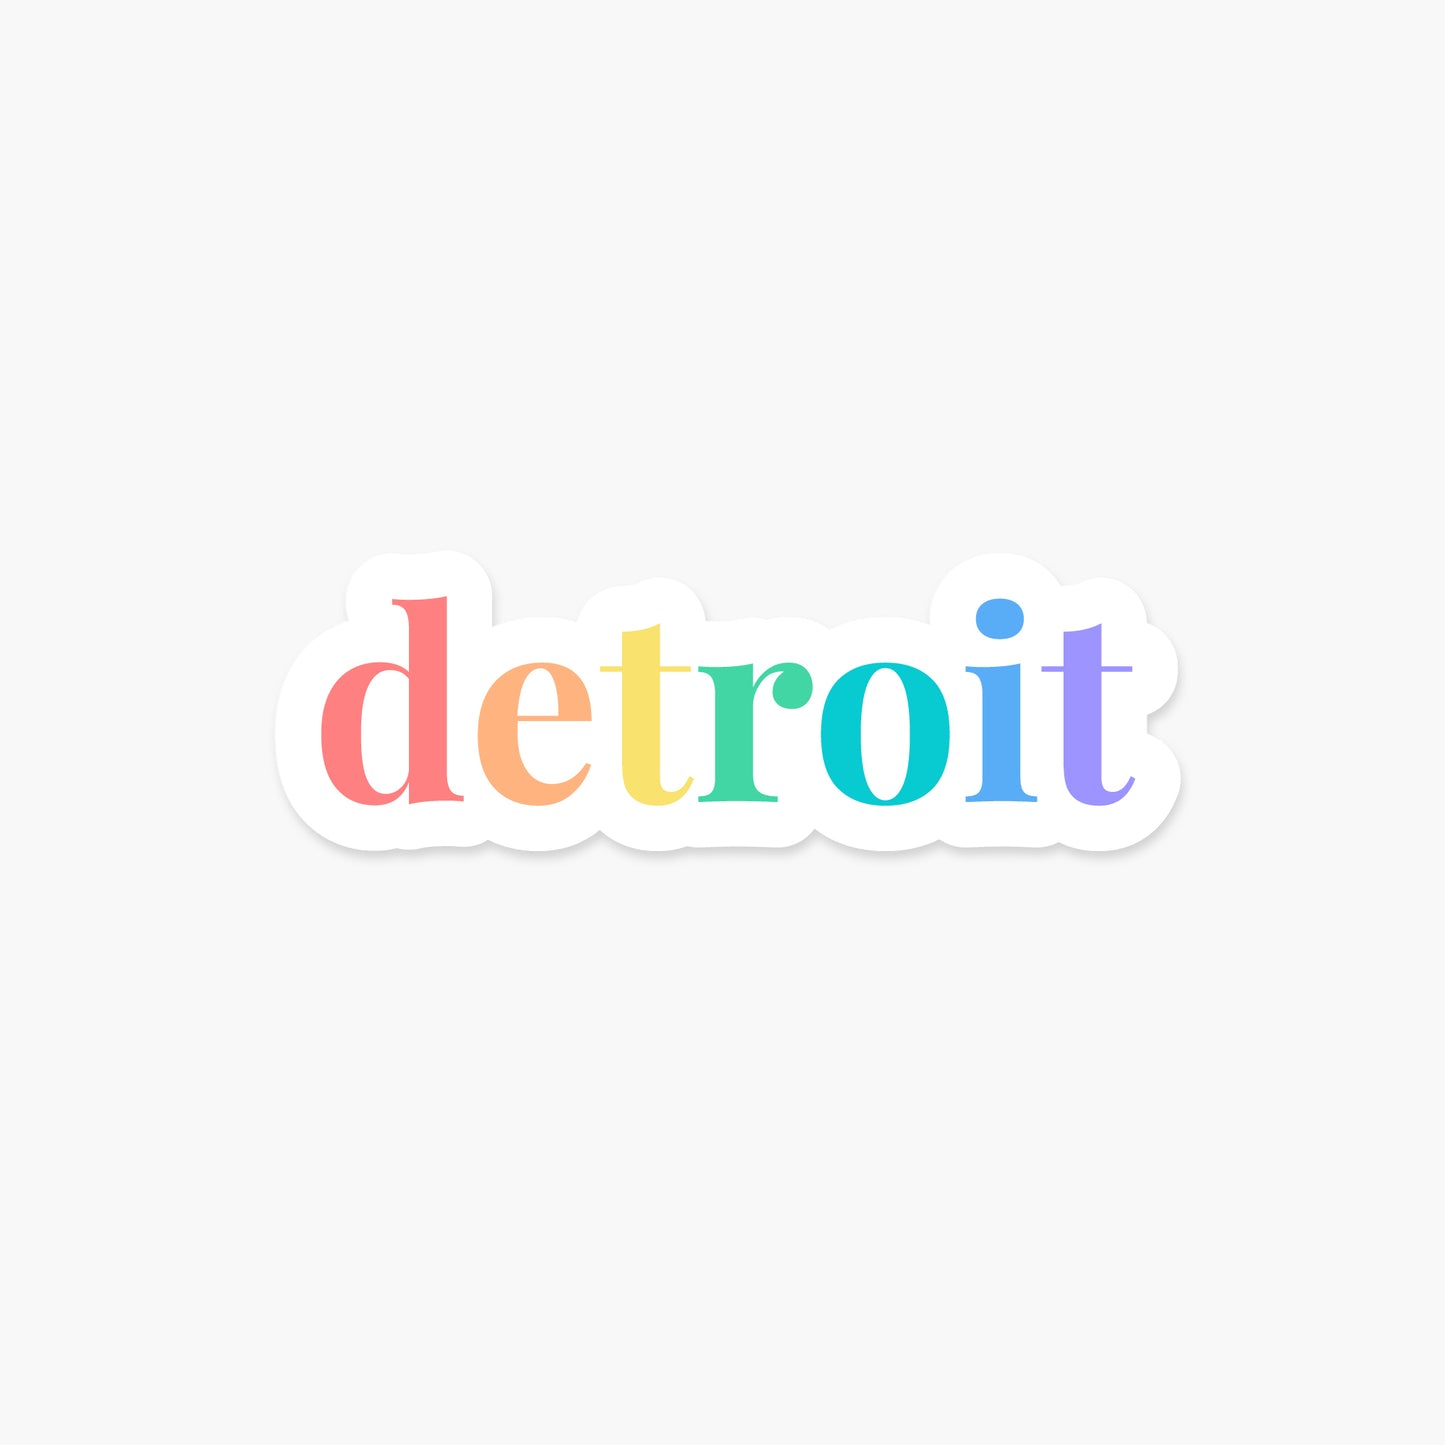 Detroit, Michigan - Everyday Sticker | Footnotes Paper